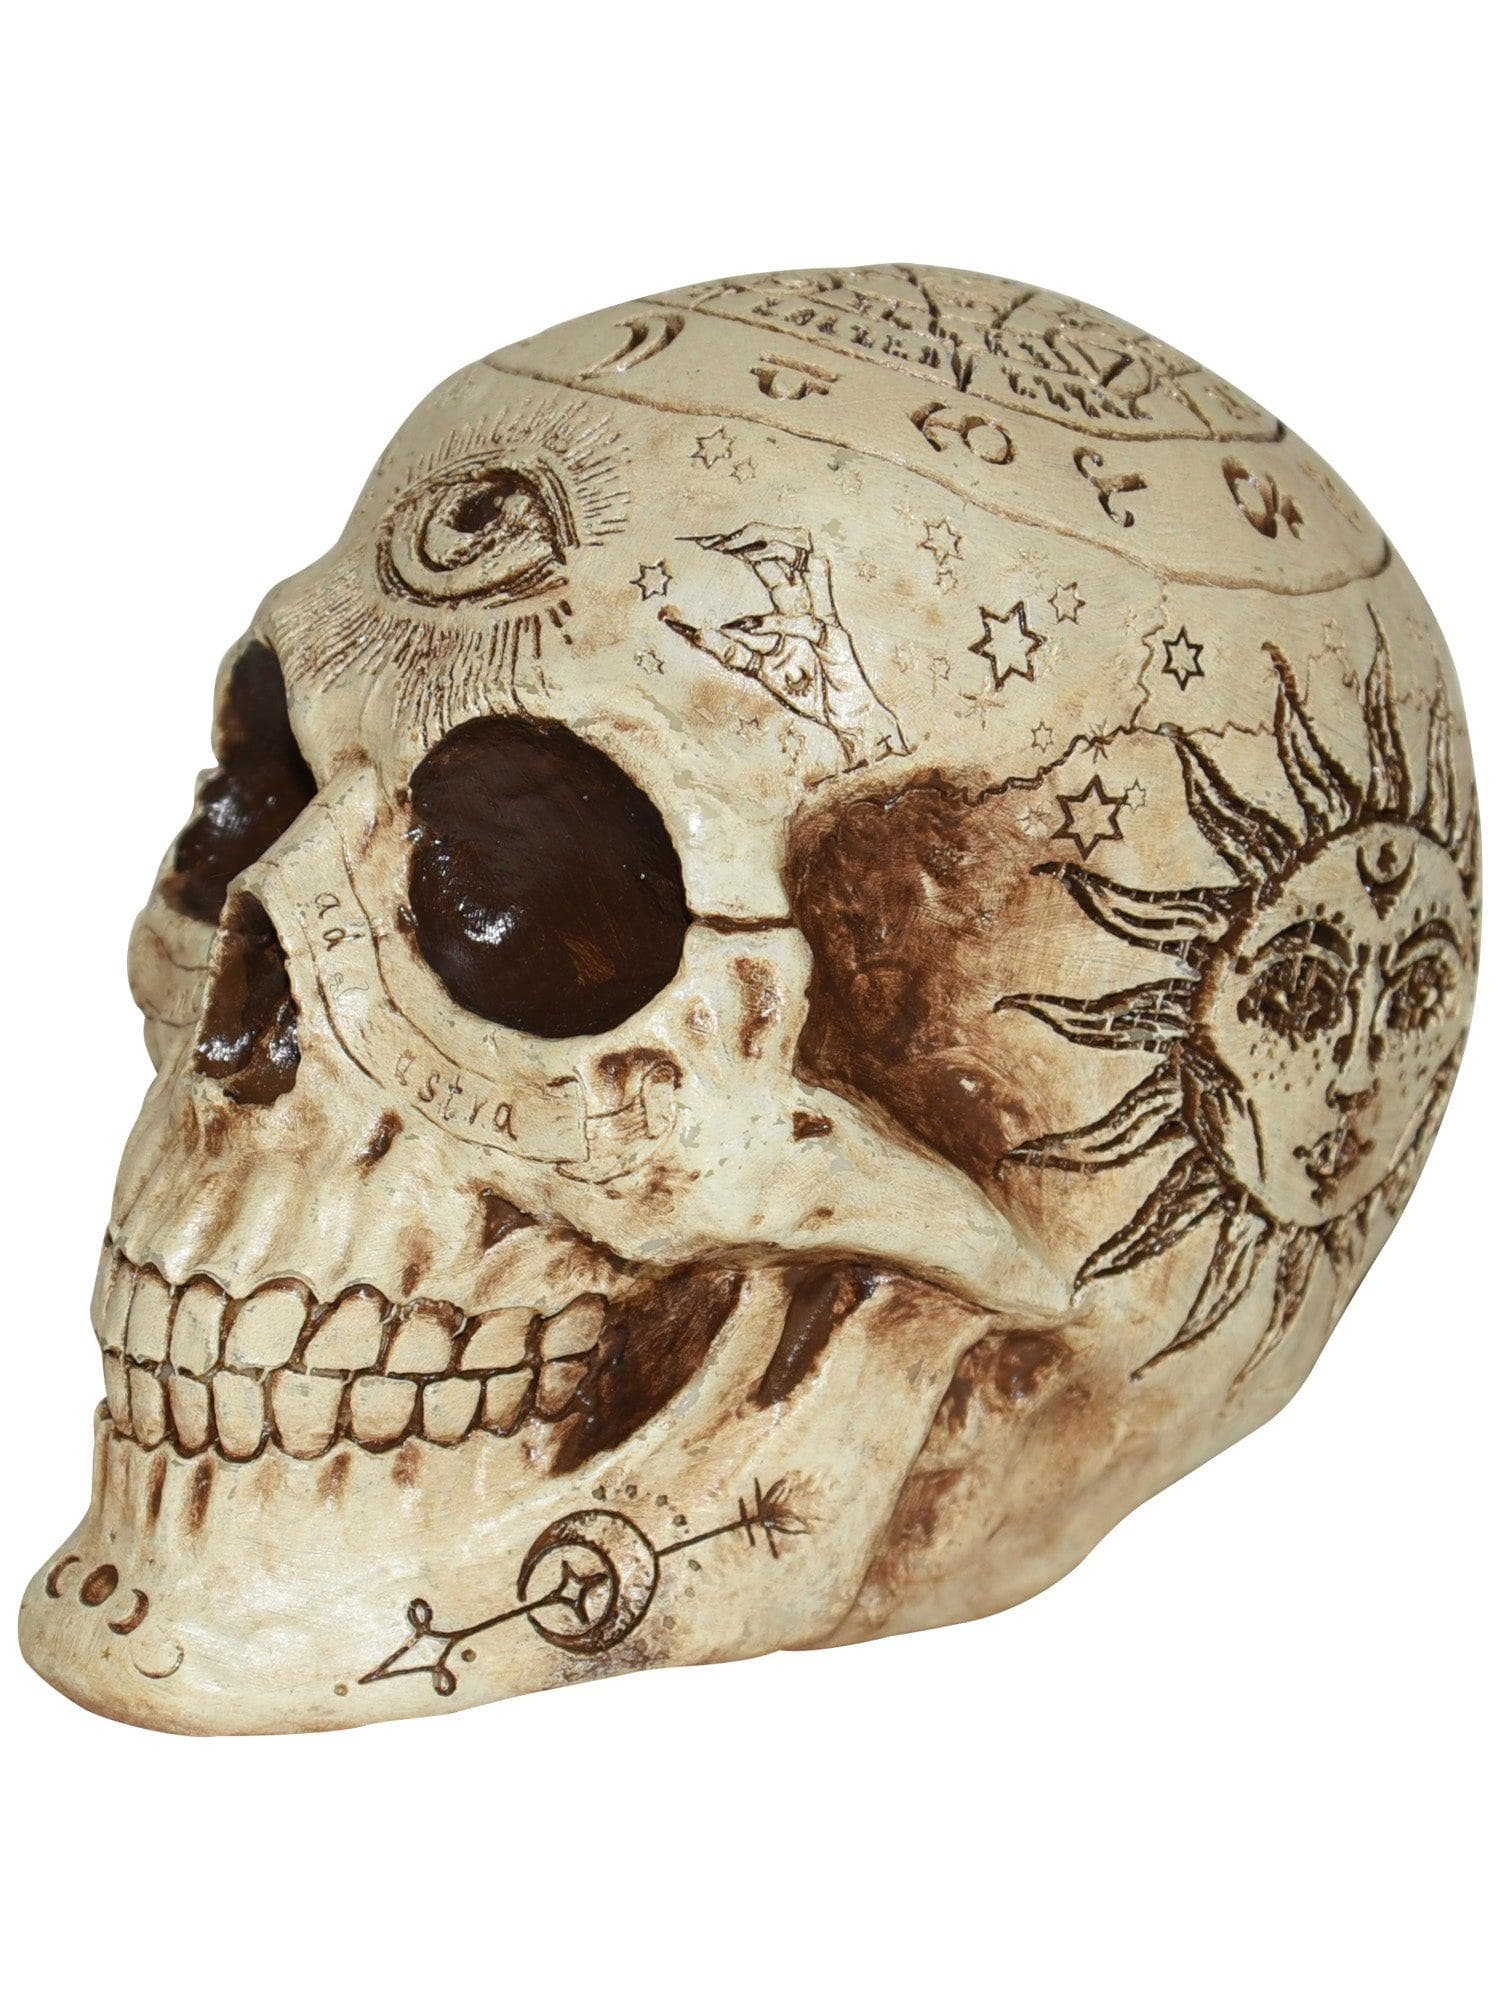 7 Inch Fortune Telling Skull Prop - costumes.com